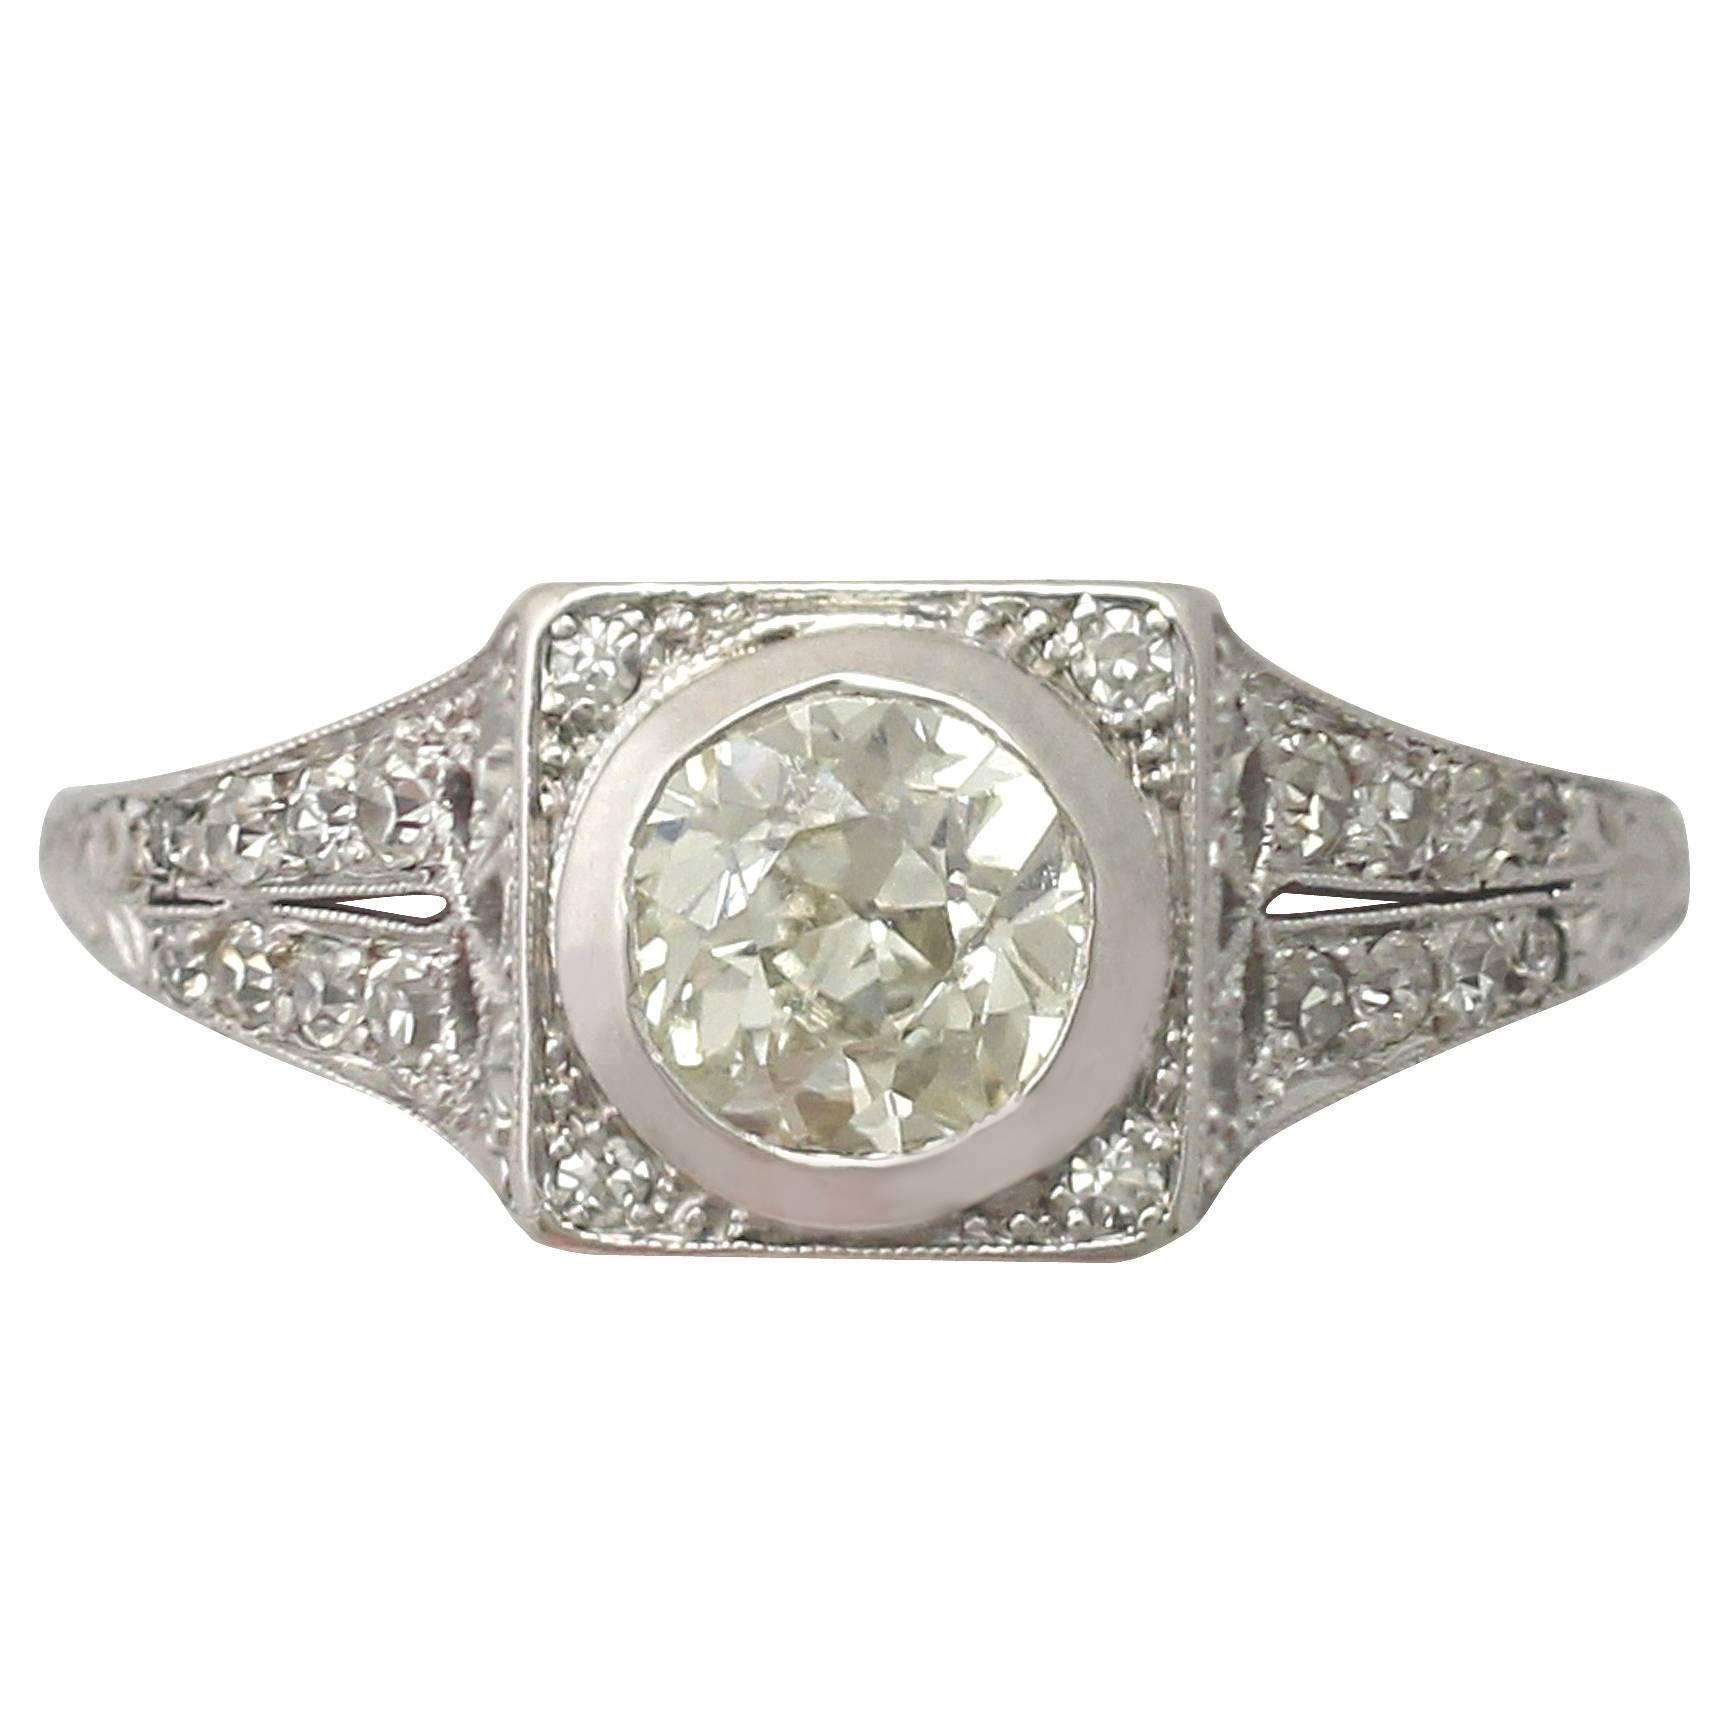 1920s 1.15 Carat Diamond and Platinum Cocktail Ring